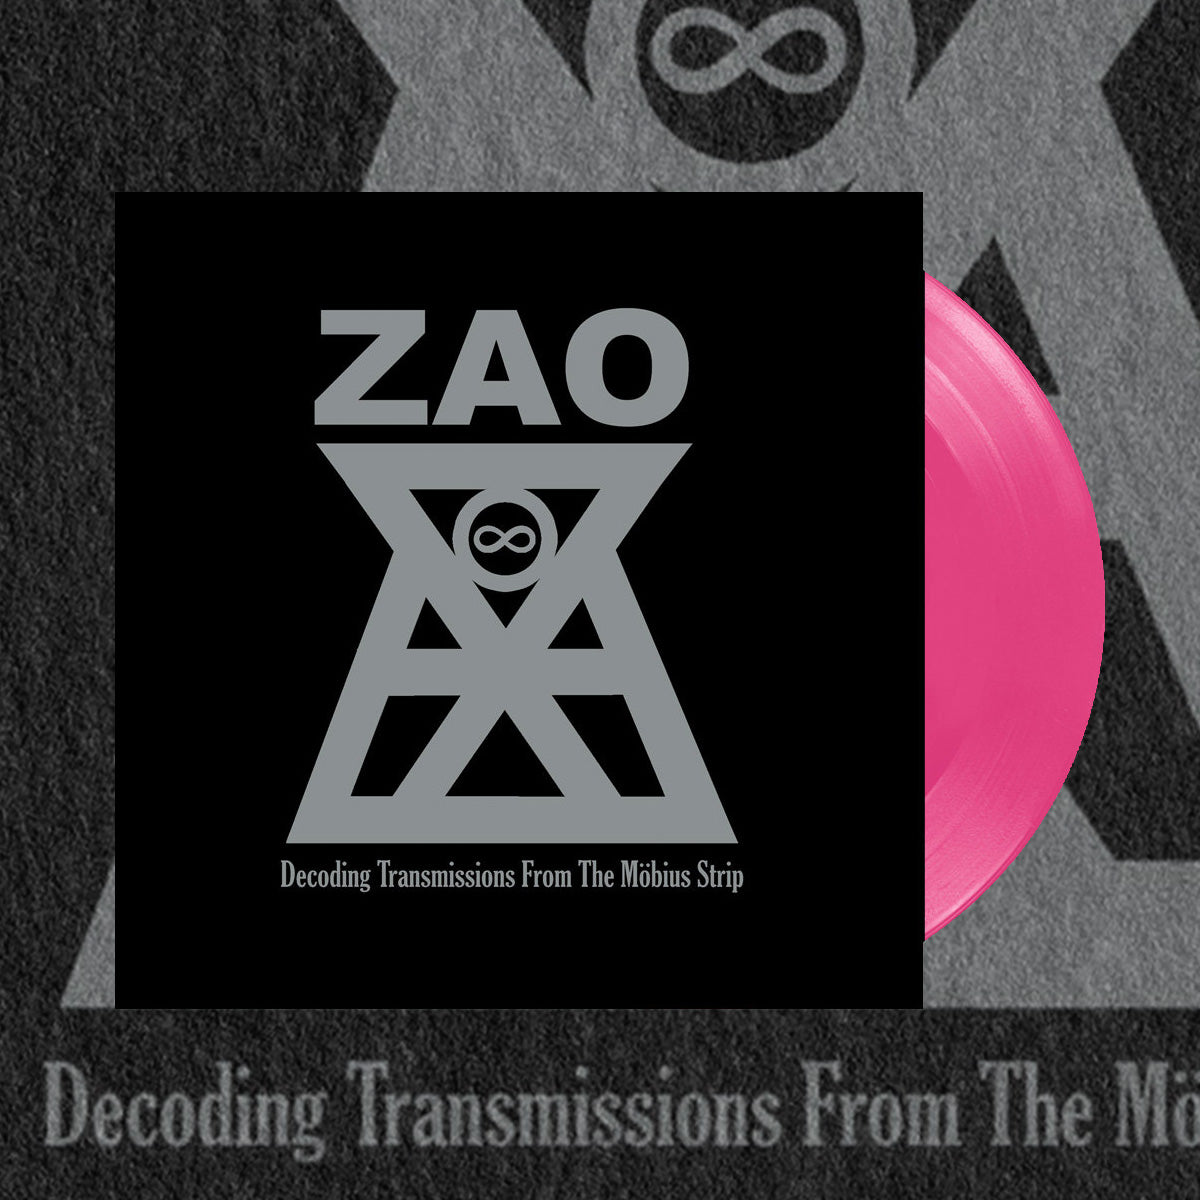 ZAO "Decoding Transmissions From The Möbius Strip" 7" VINYL